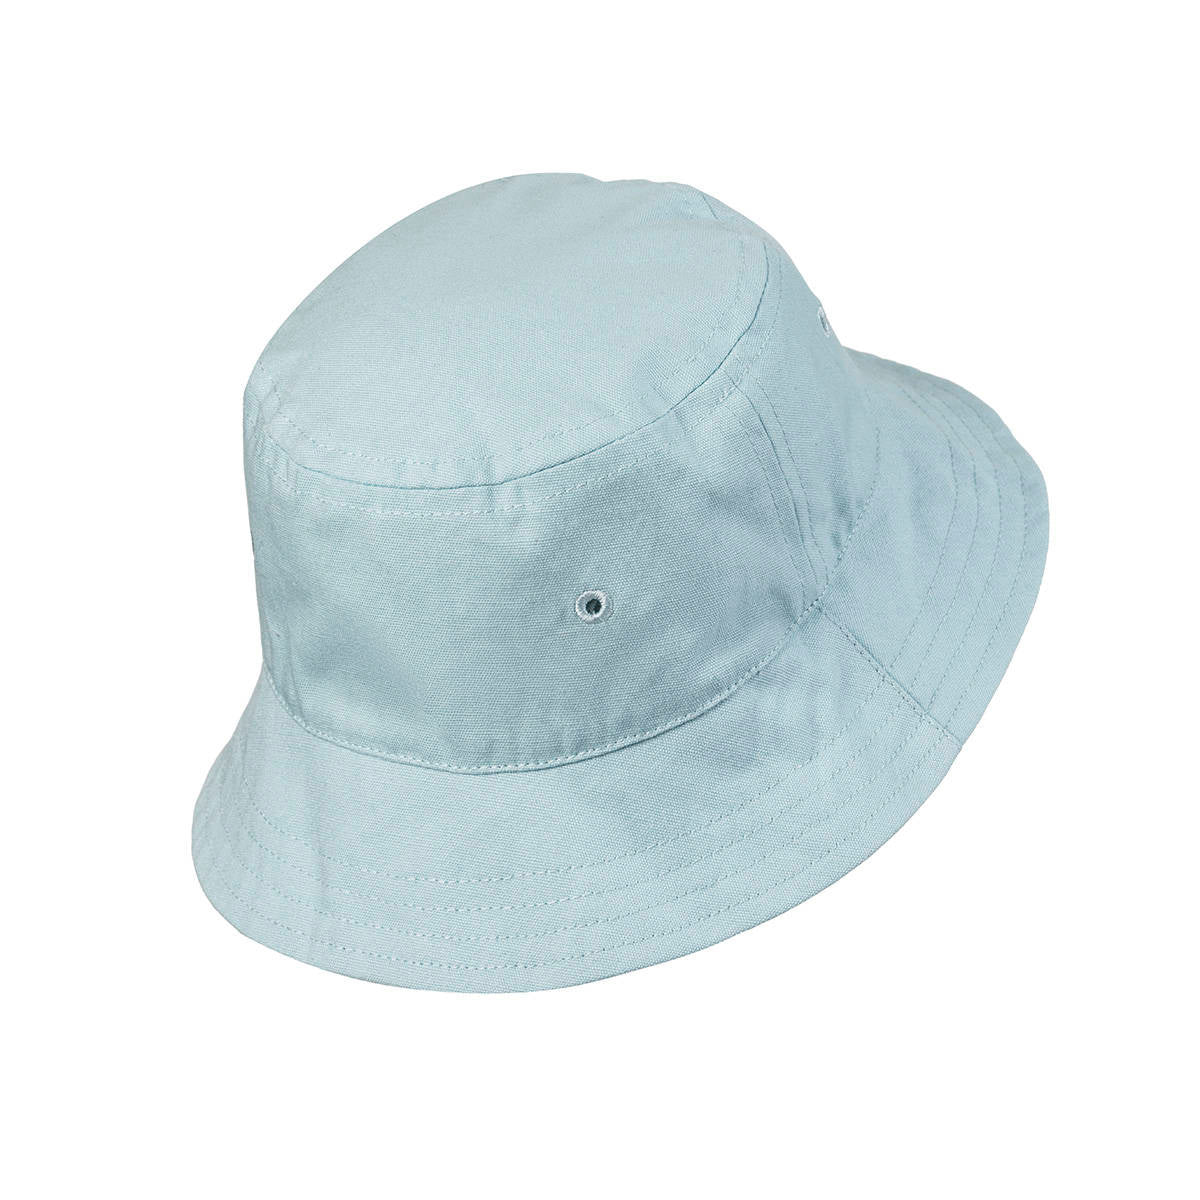 Kapelusz Bucket Hat Elodie Details Aqua Turquoise 0-6 m-cy